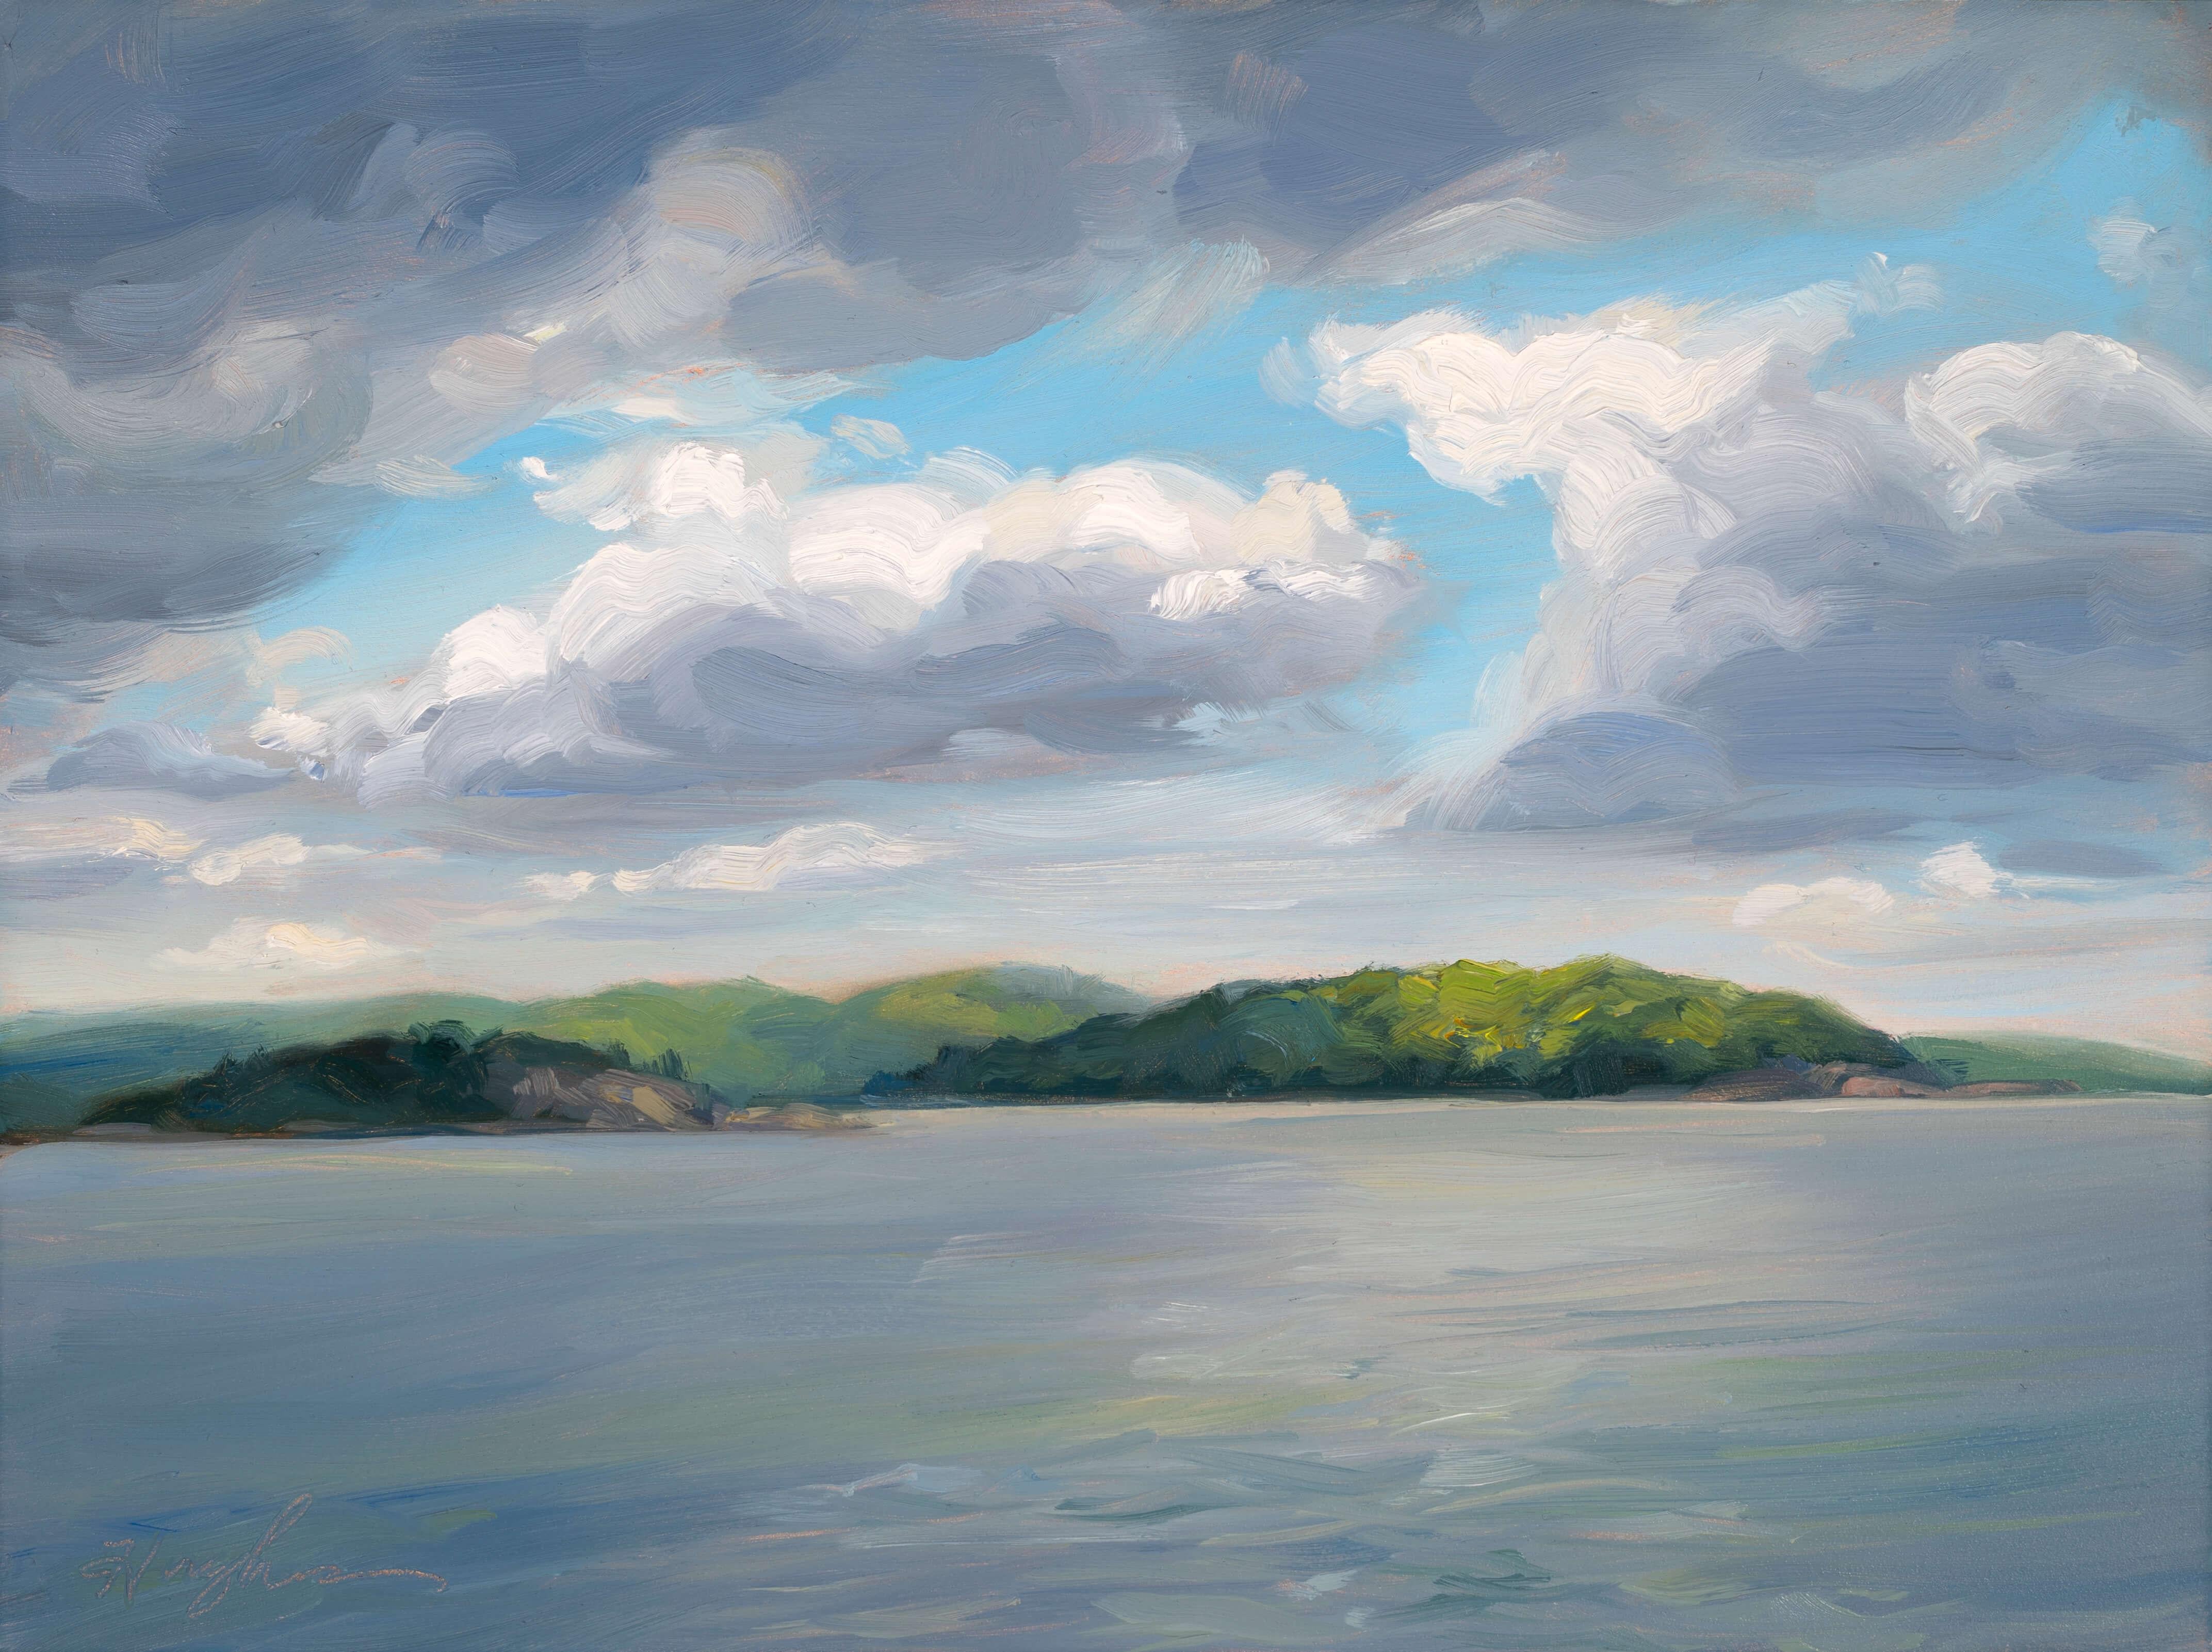 Primary Hughes Landscape Painting - Presque Isle (Day 81) June 2, 2022, Original Oil Painting